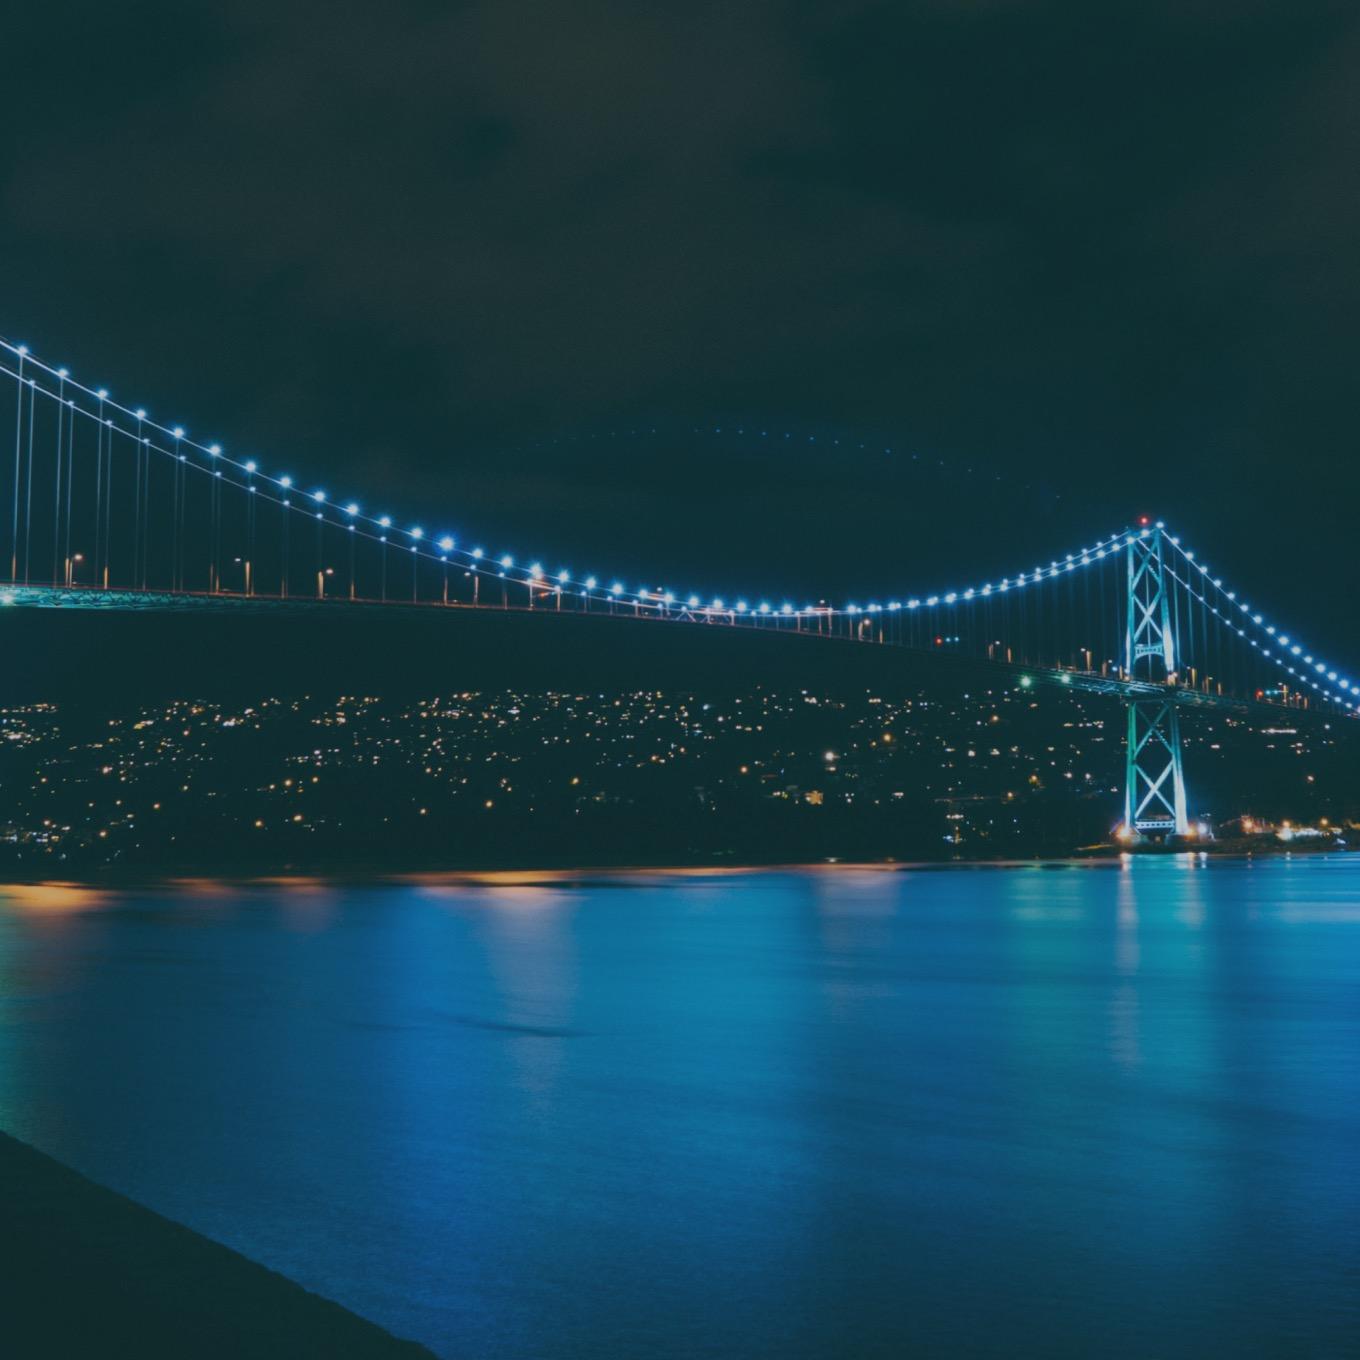 A nighttime photo of the Lions Gate Bridge.